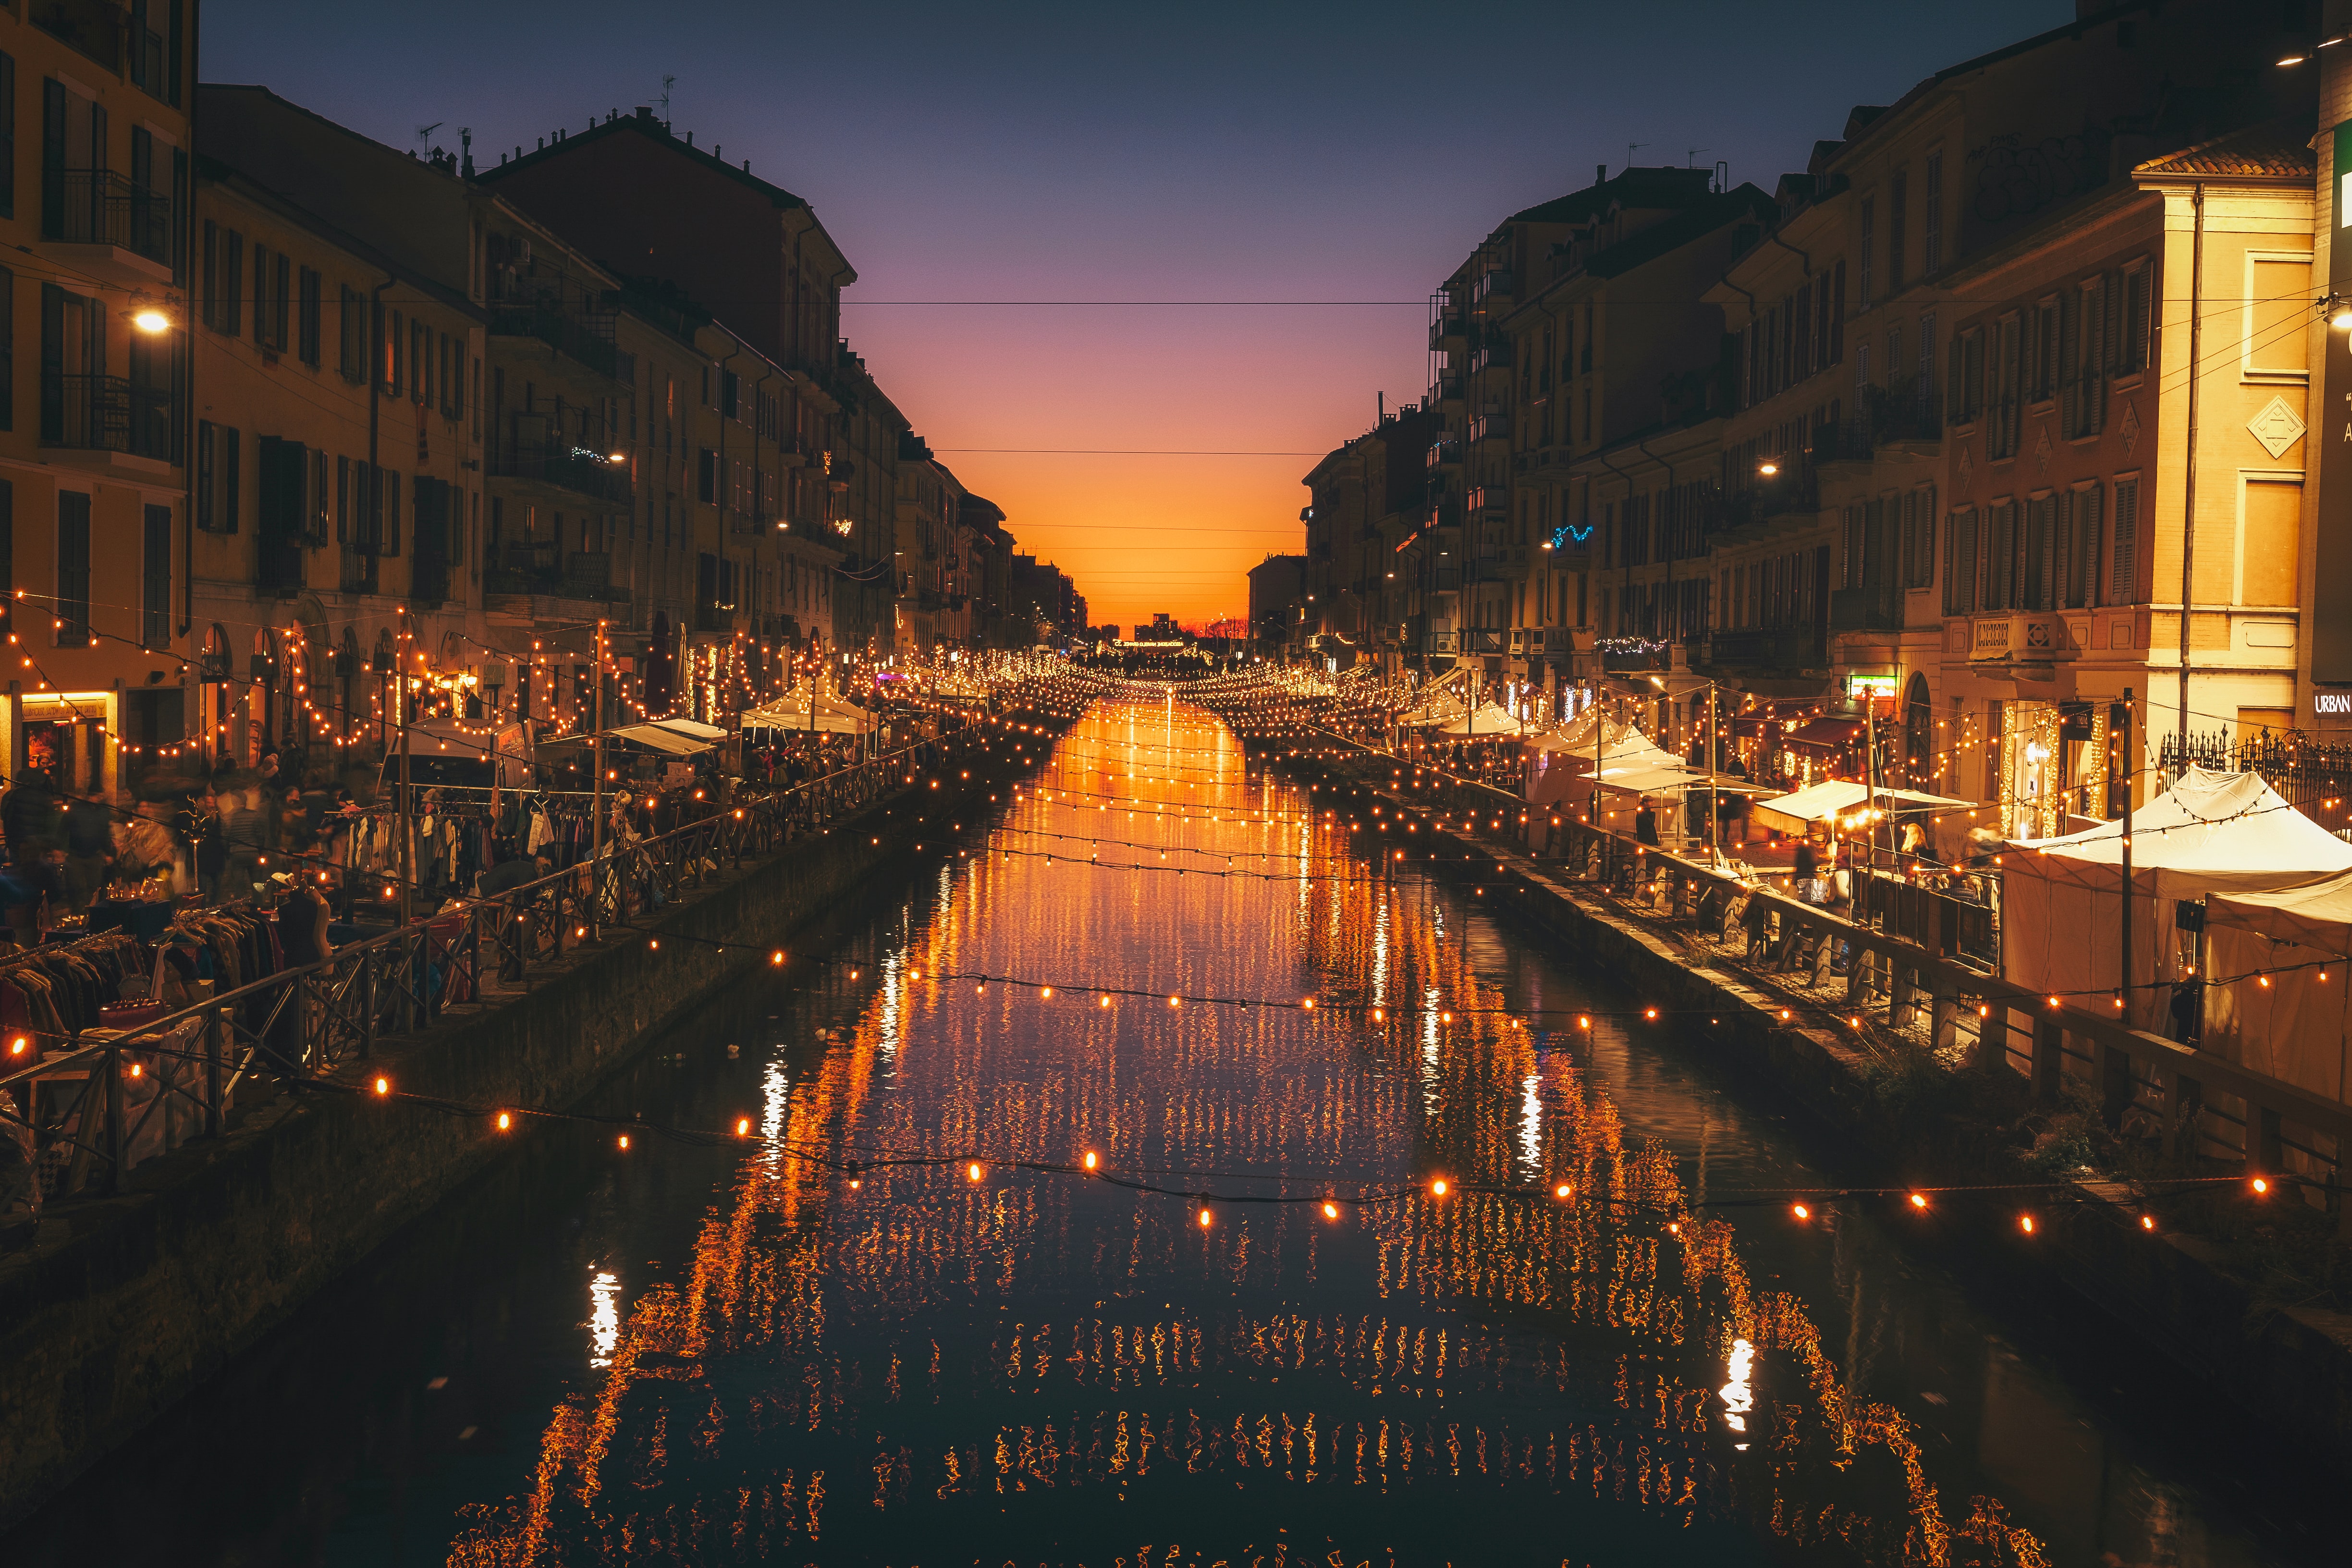 Milan's Navigli Canals at sunset